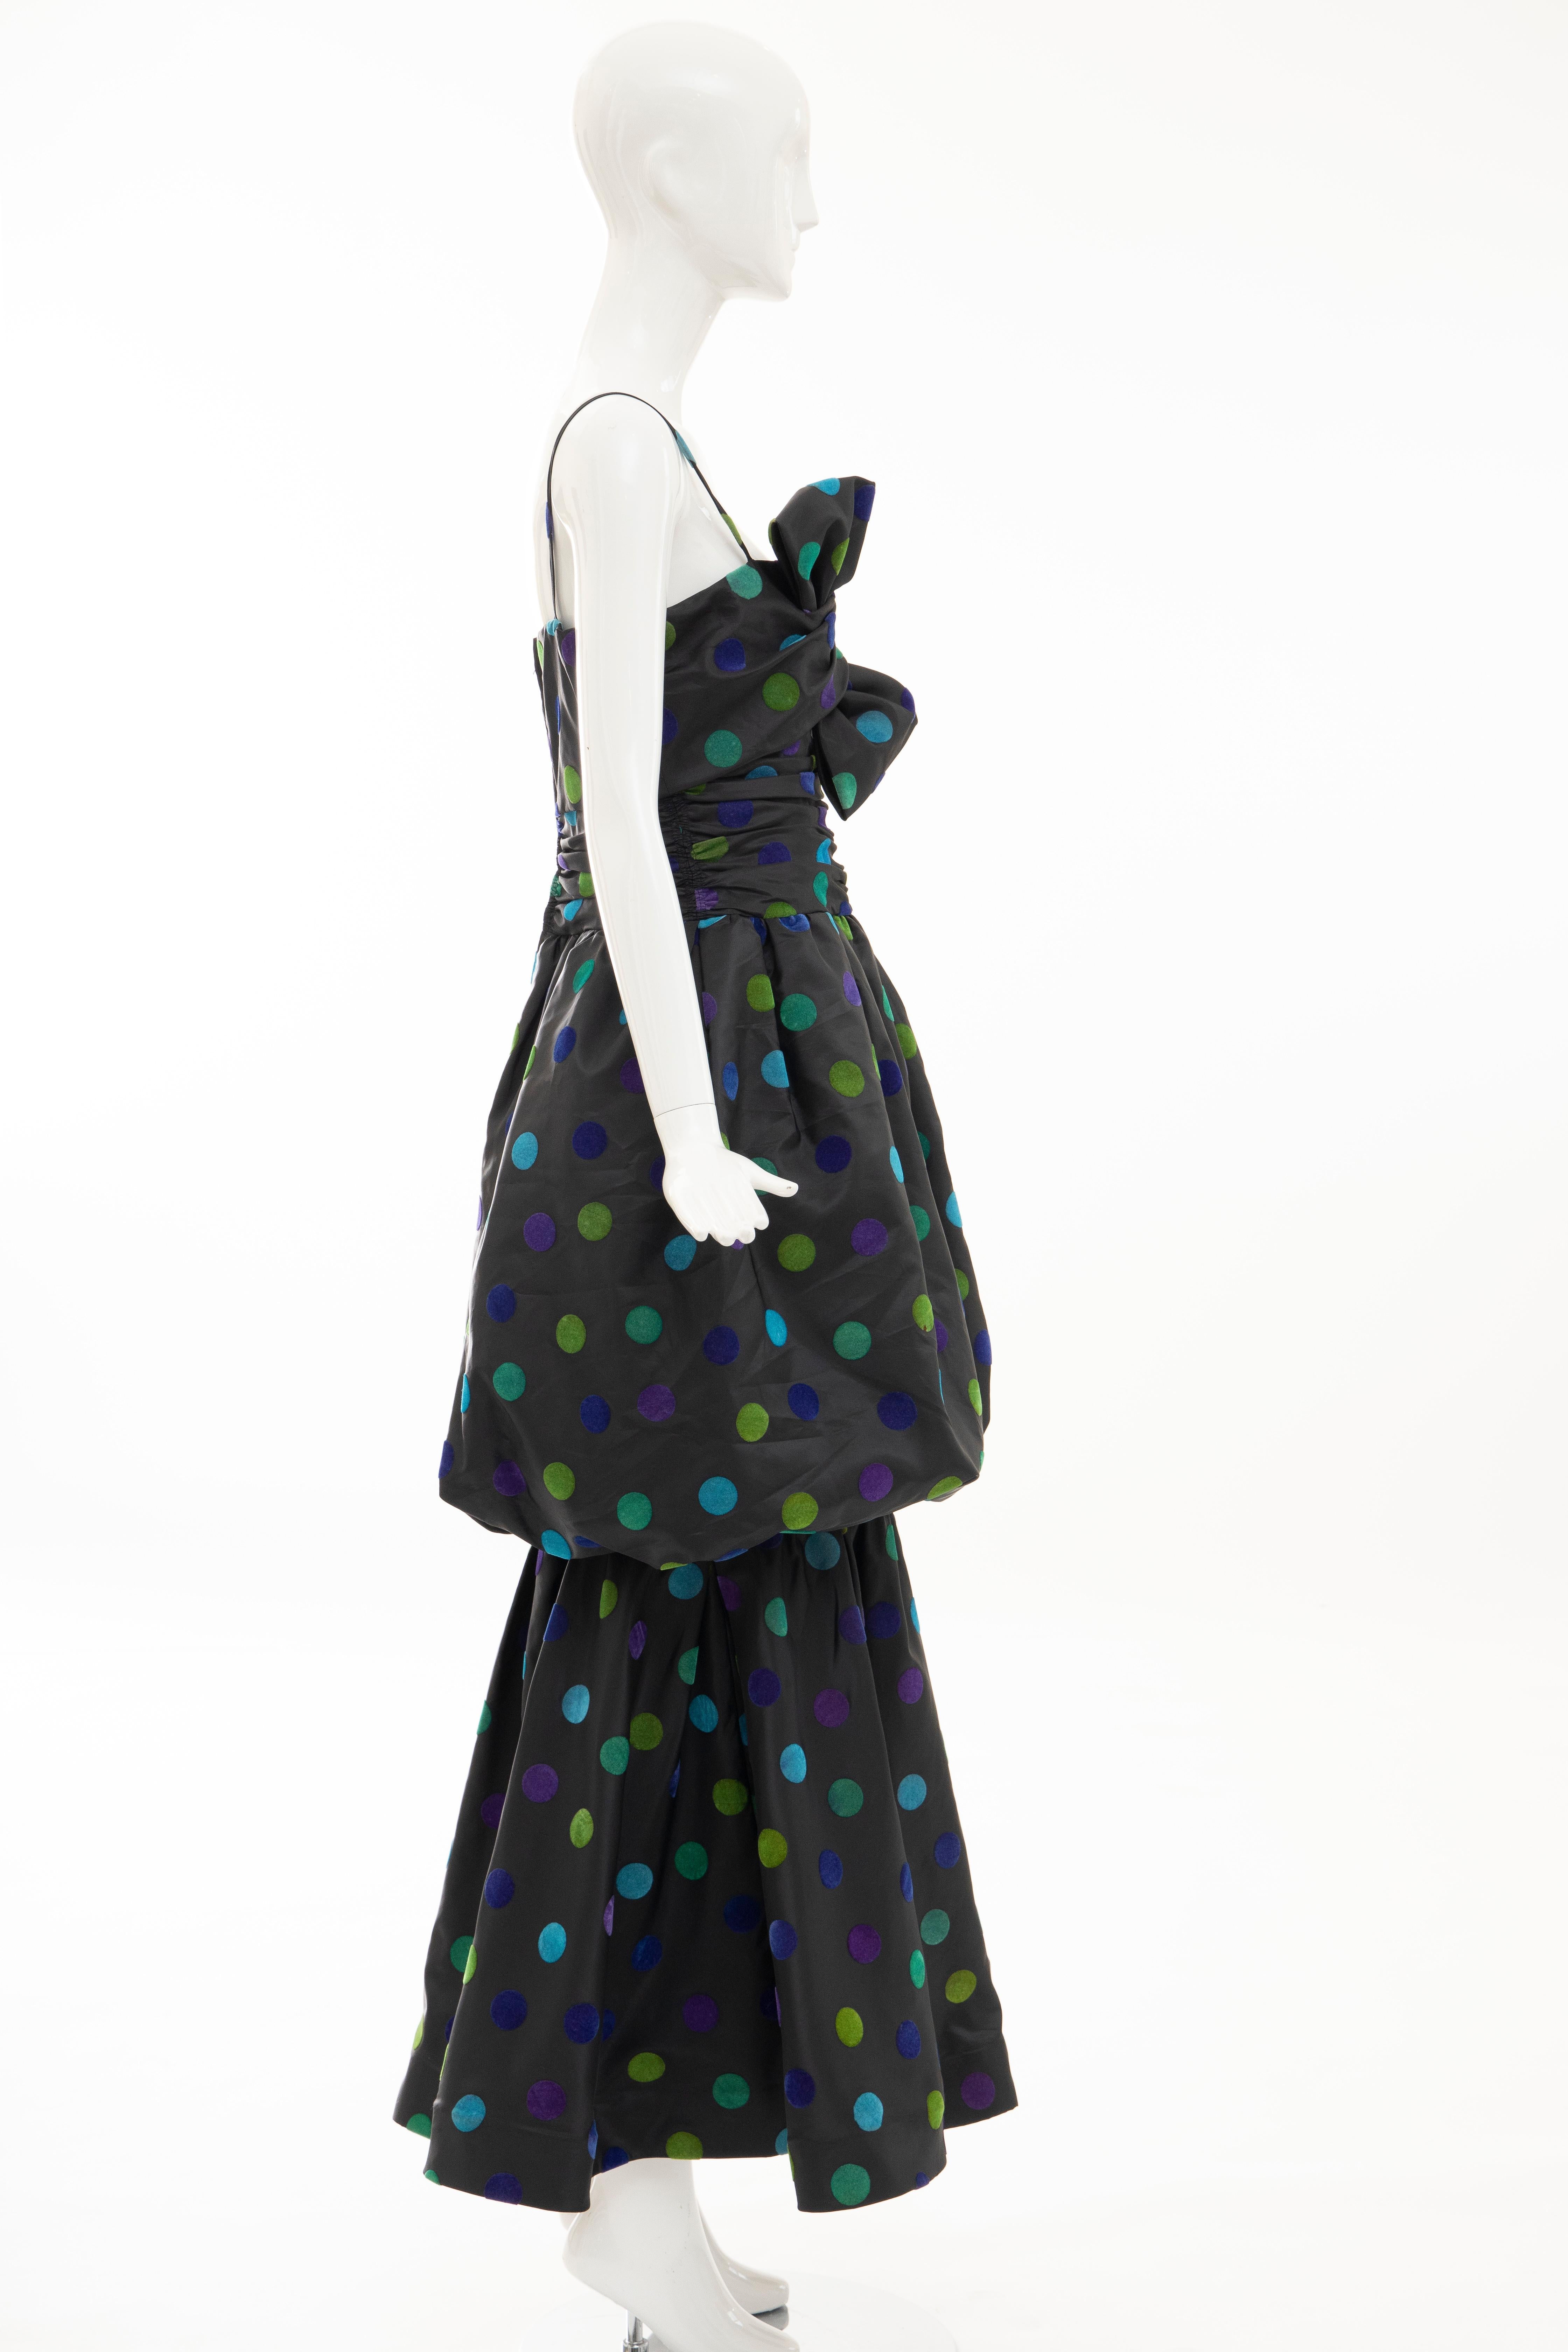 Nina Ricci Black Taffeta Velveteen Polka Dots Evening Dress, Circa: 1980s 2